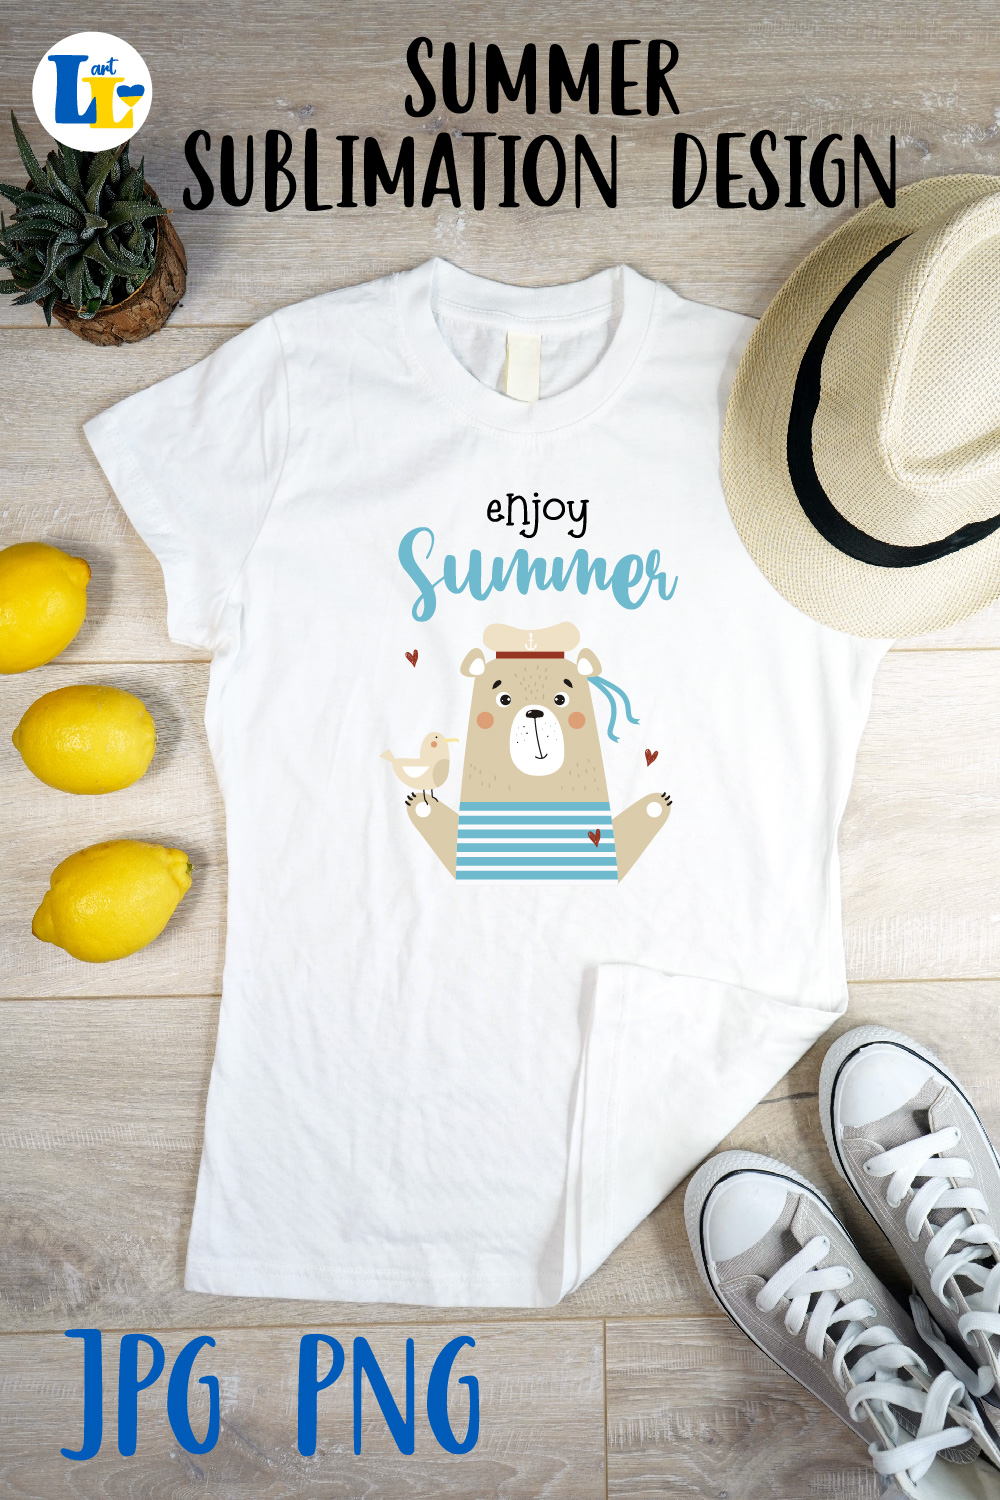 Cute Bear Sailor Summer Sublimation Design Pinterest Image.